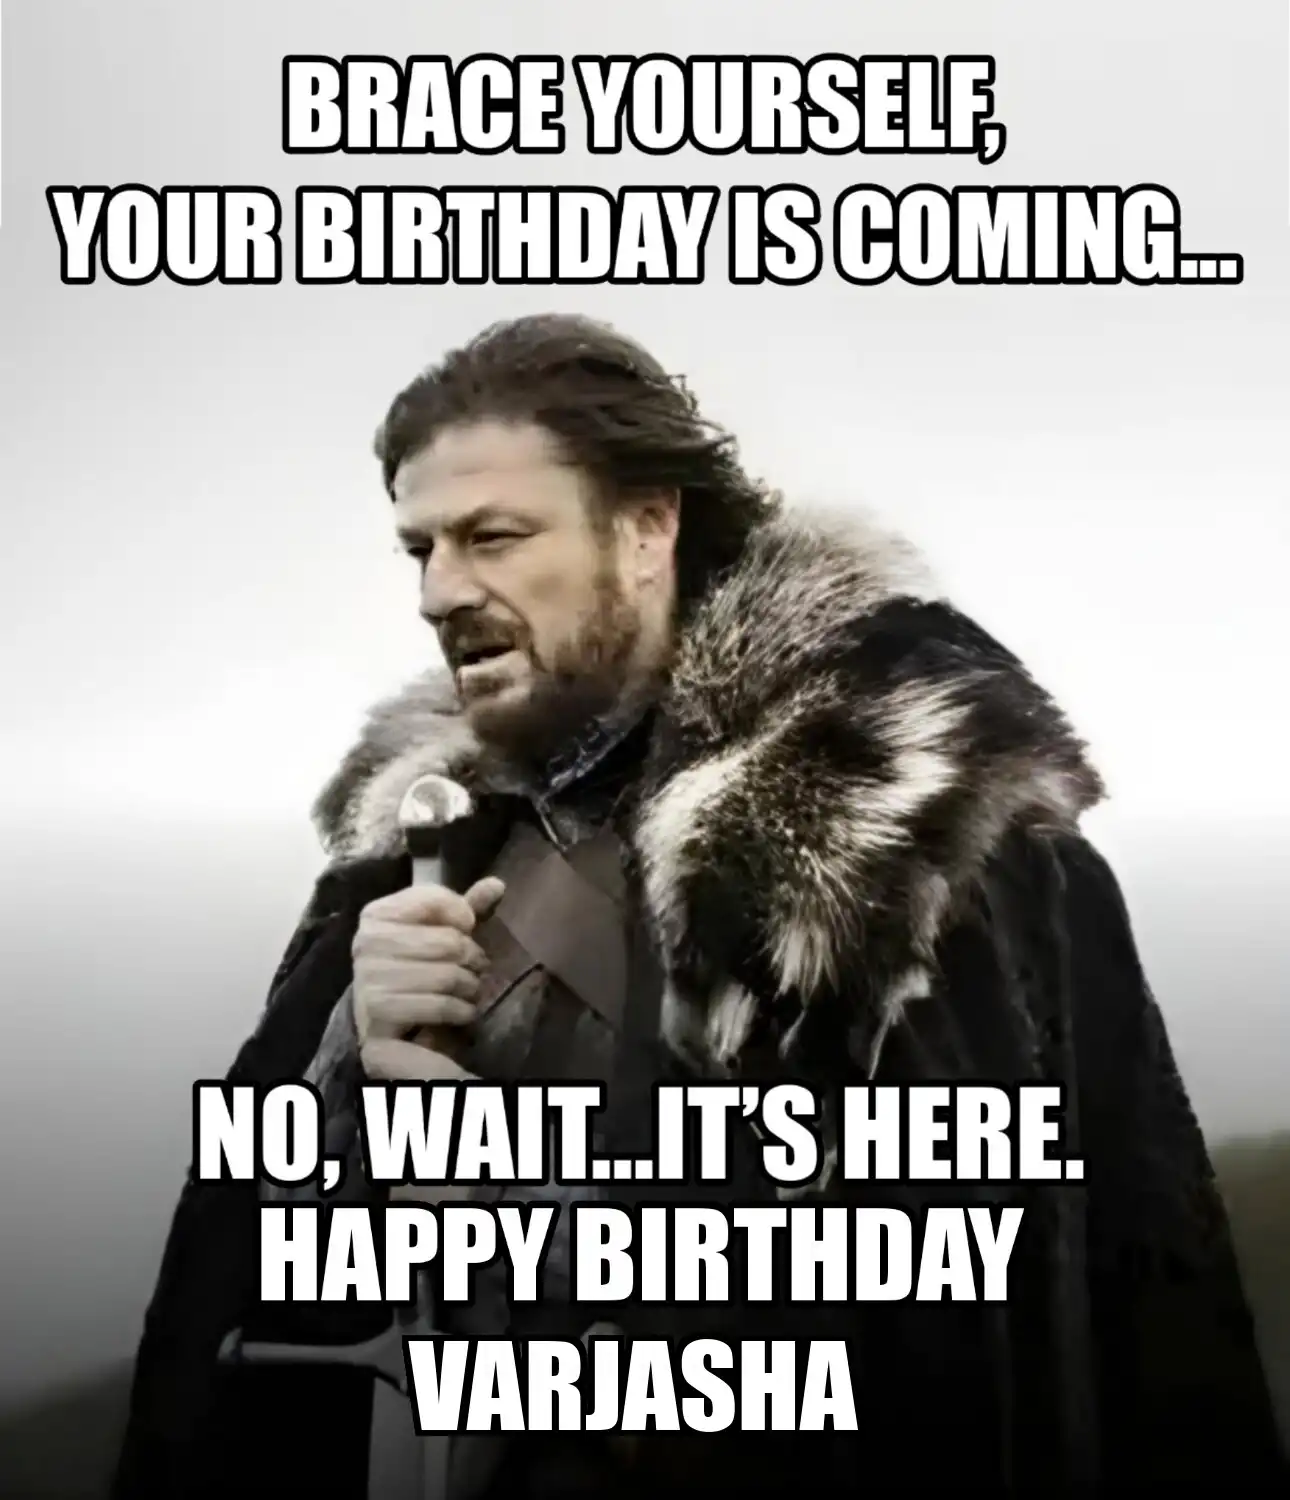 Happy Birthday Varjasha Brace Yourself Your Birthday Is Coming Meme